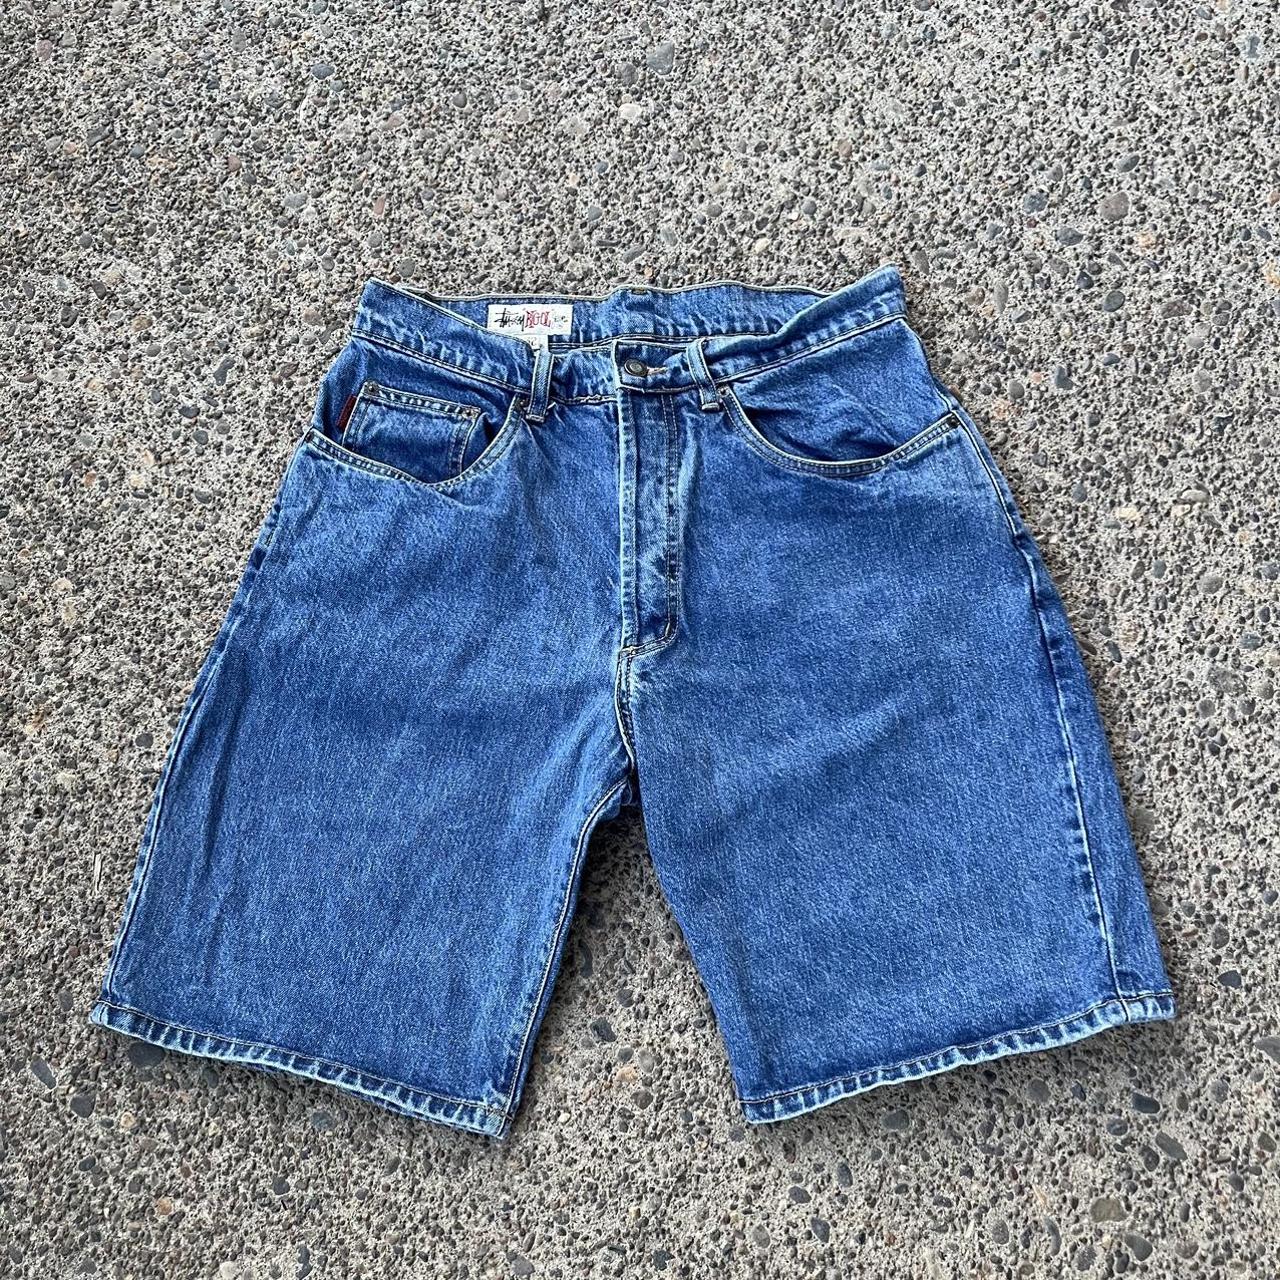 Stussy Big Ol Jeans Shorts. Made in... - Depop